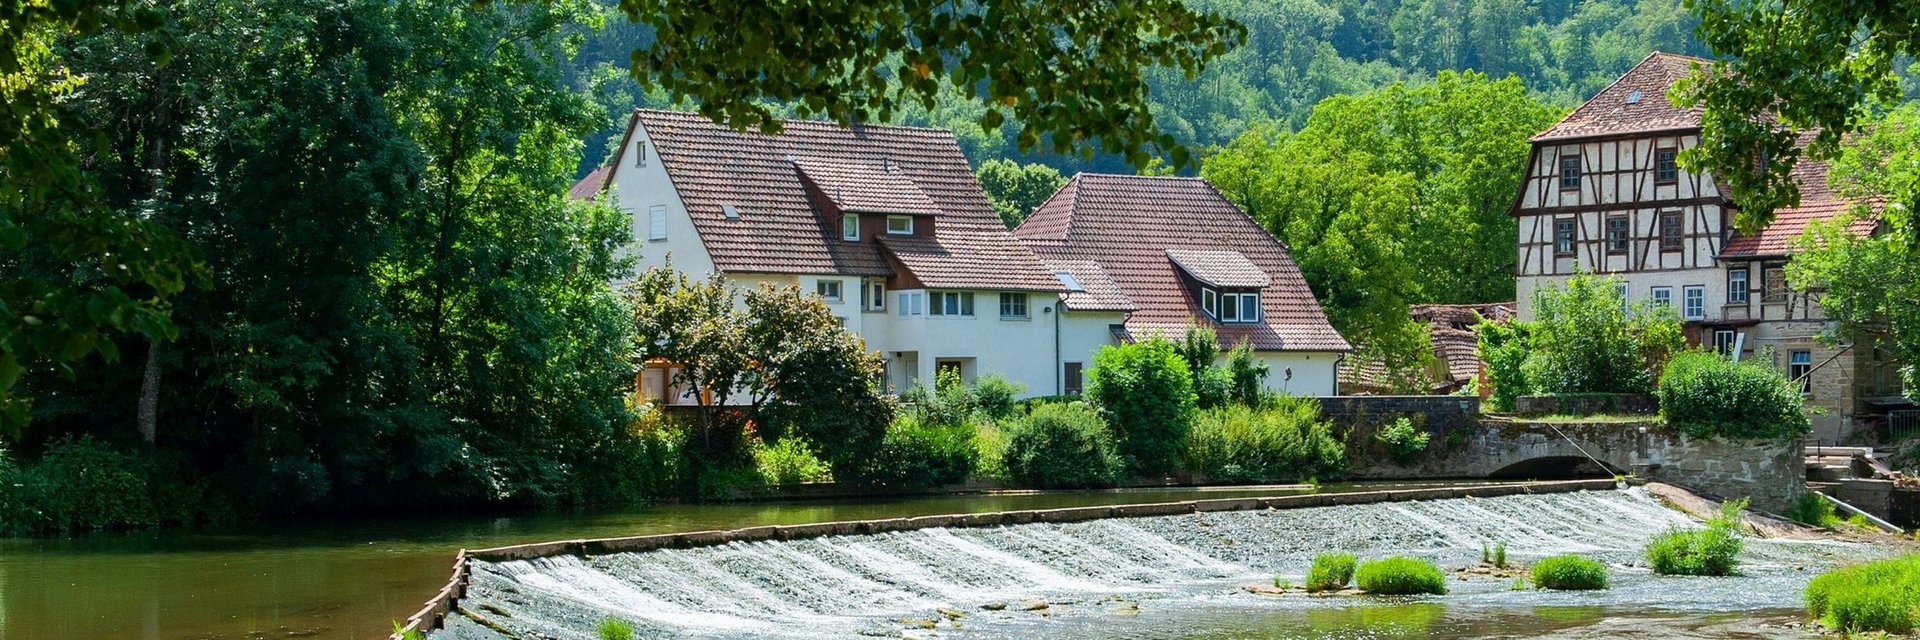 Fluss in Forchtenberg | Hohenlohe | Wohnmobiltouren in Baden-Württemberg | © Stadt Forchtenberg